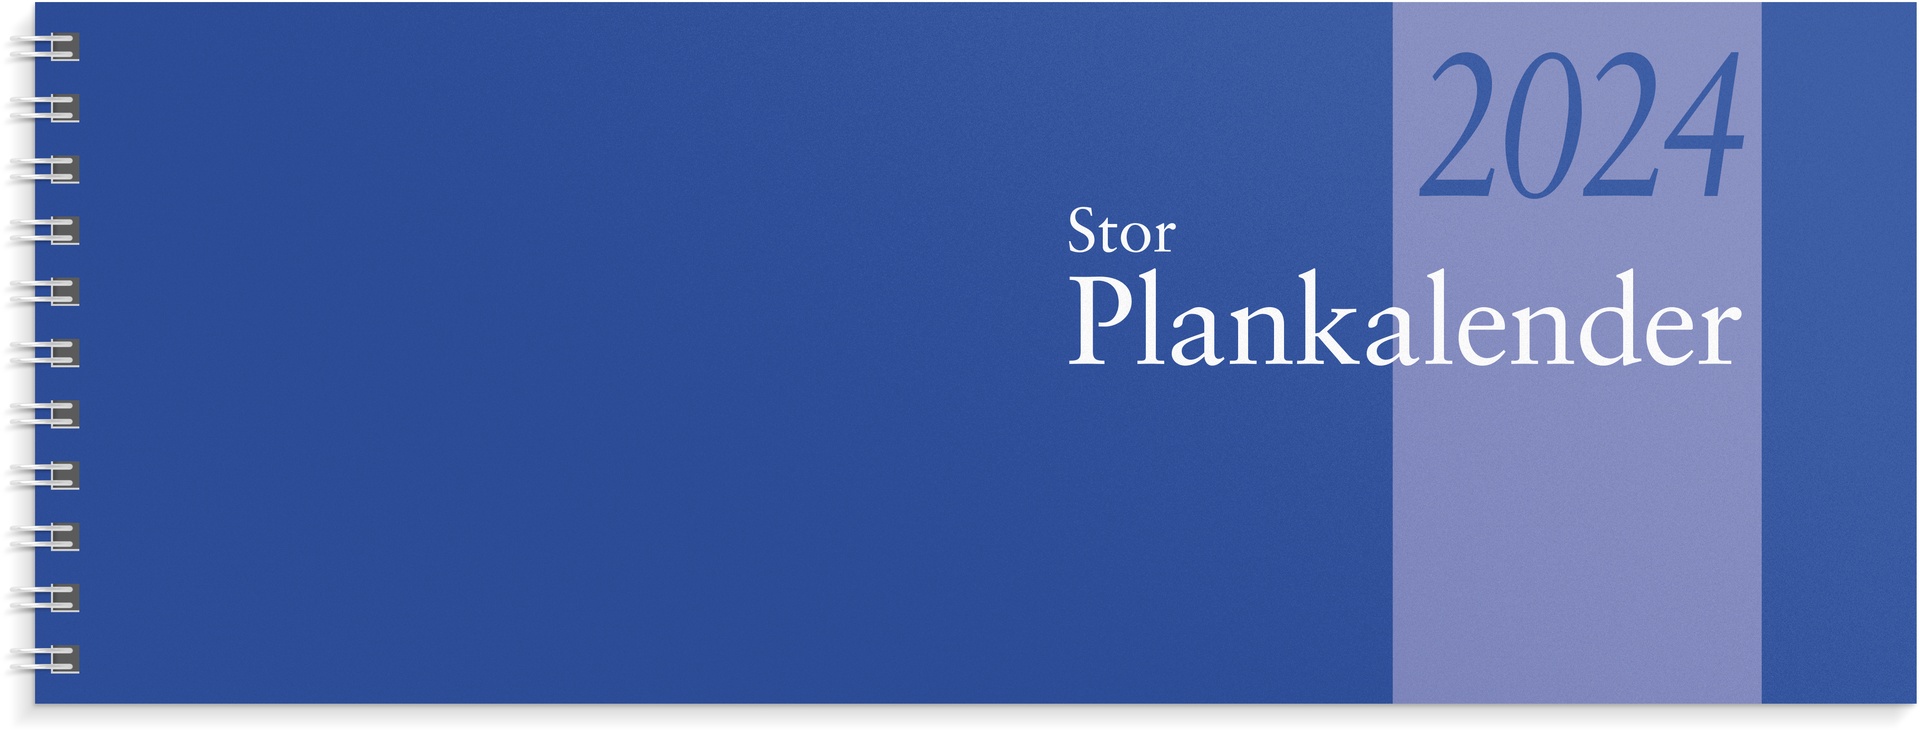 [61135124] Stor Plankalender spiralb 2024